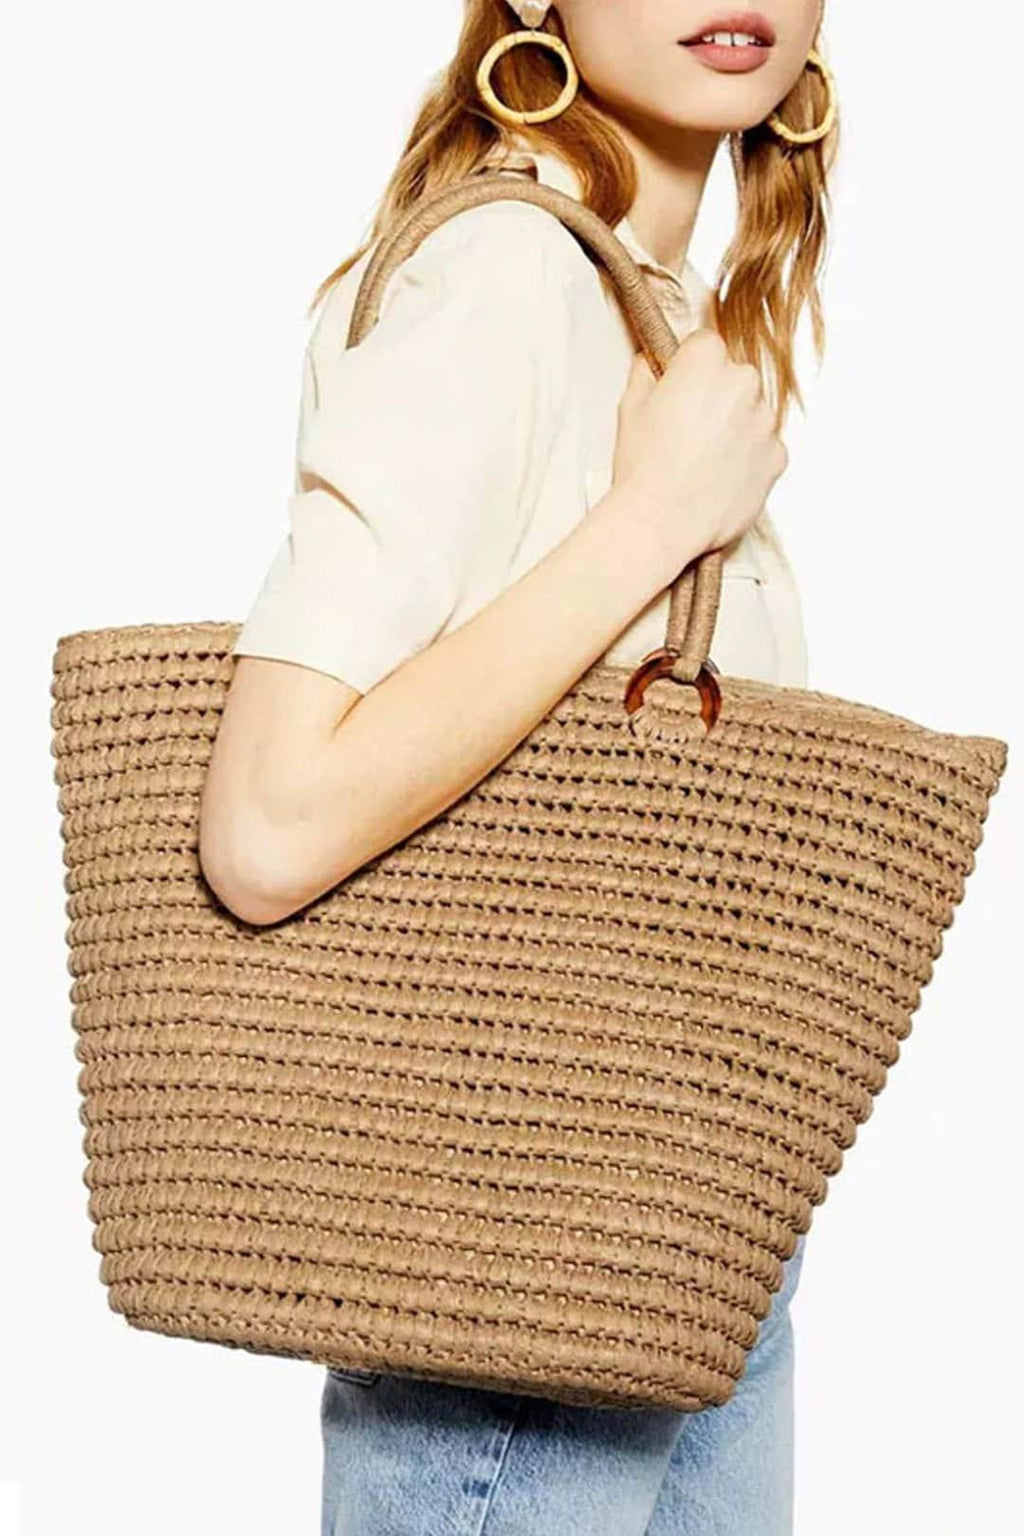 Elena Handbags Minimalistic Straw Woven Tote Bag